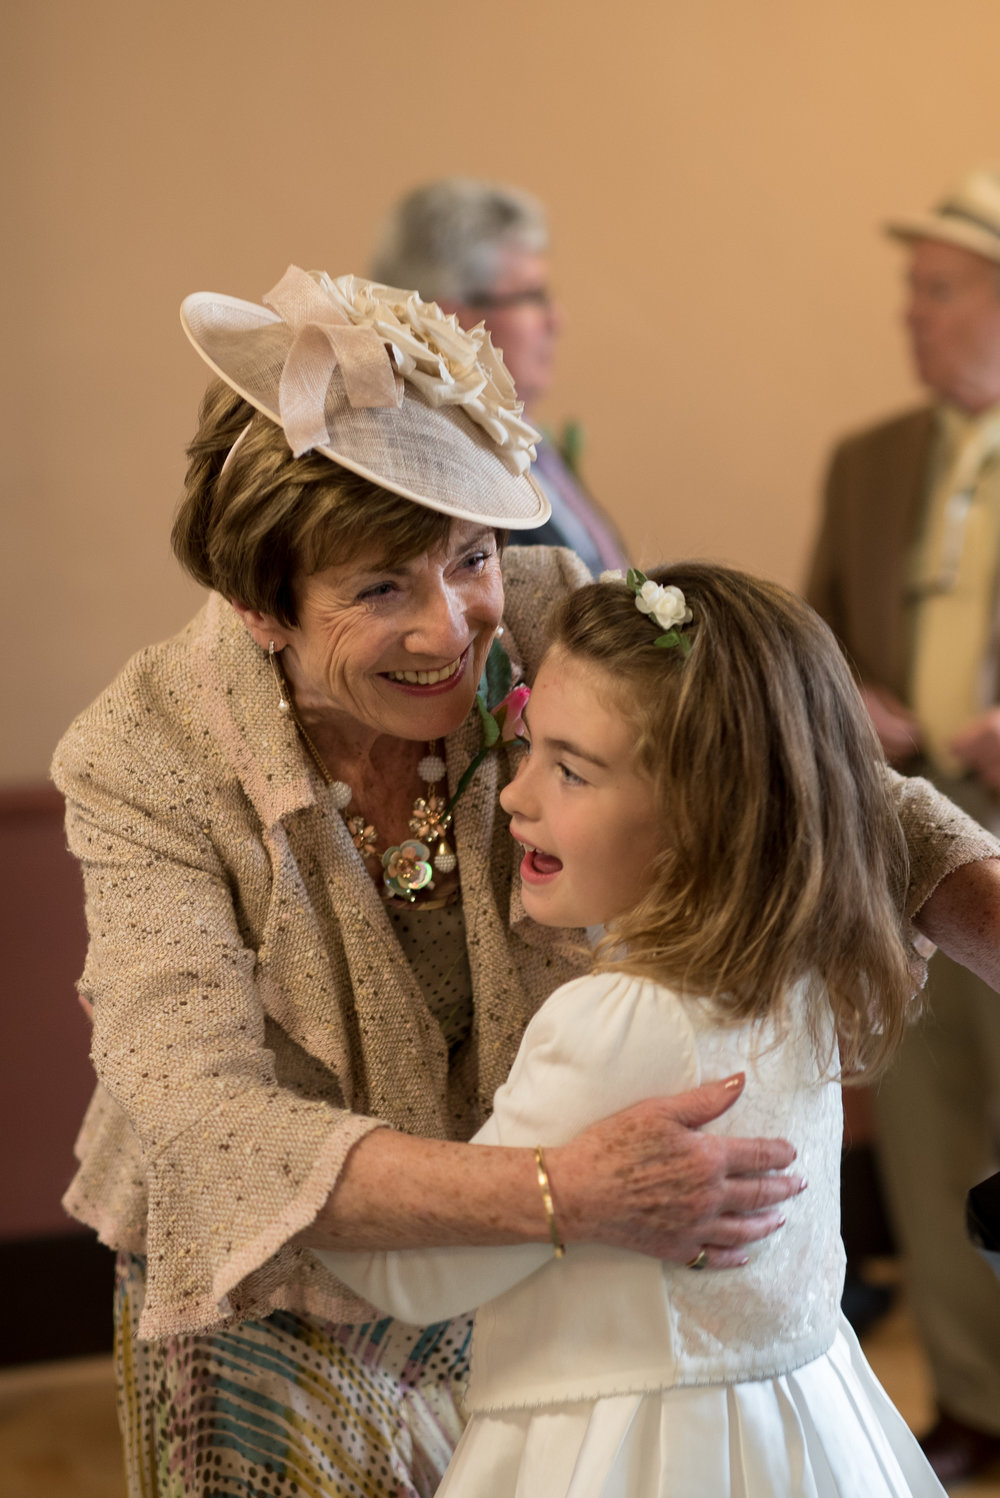 Grandmother embraces granddaughter flower girl at wedding